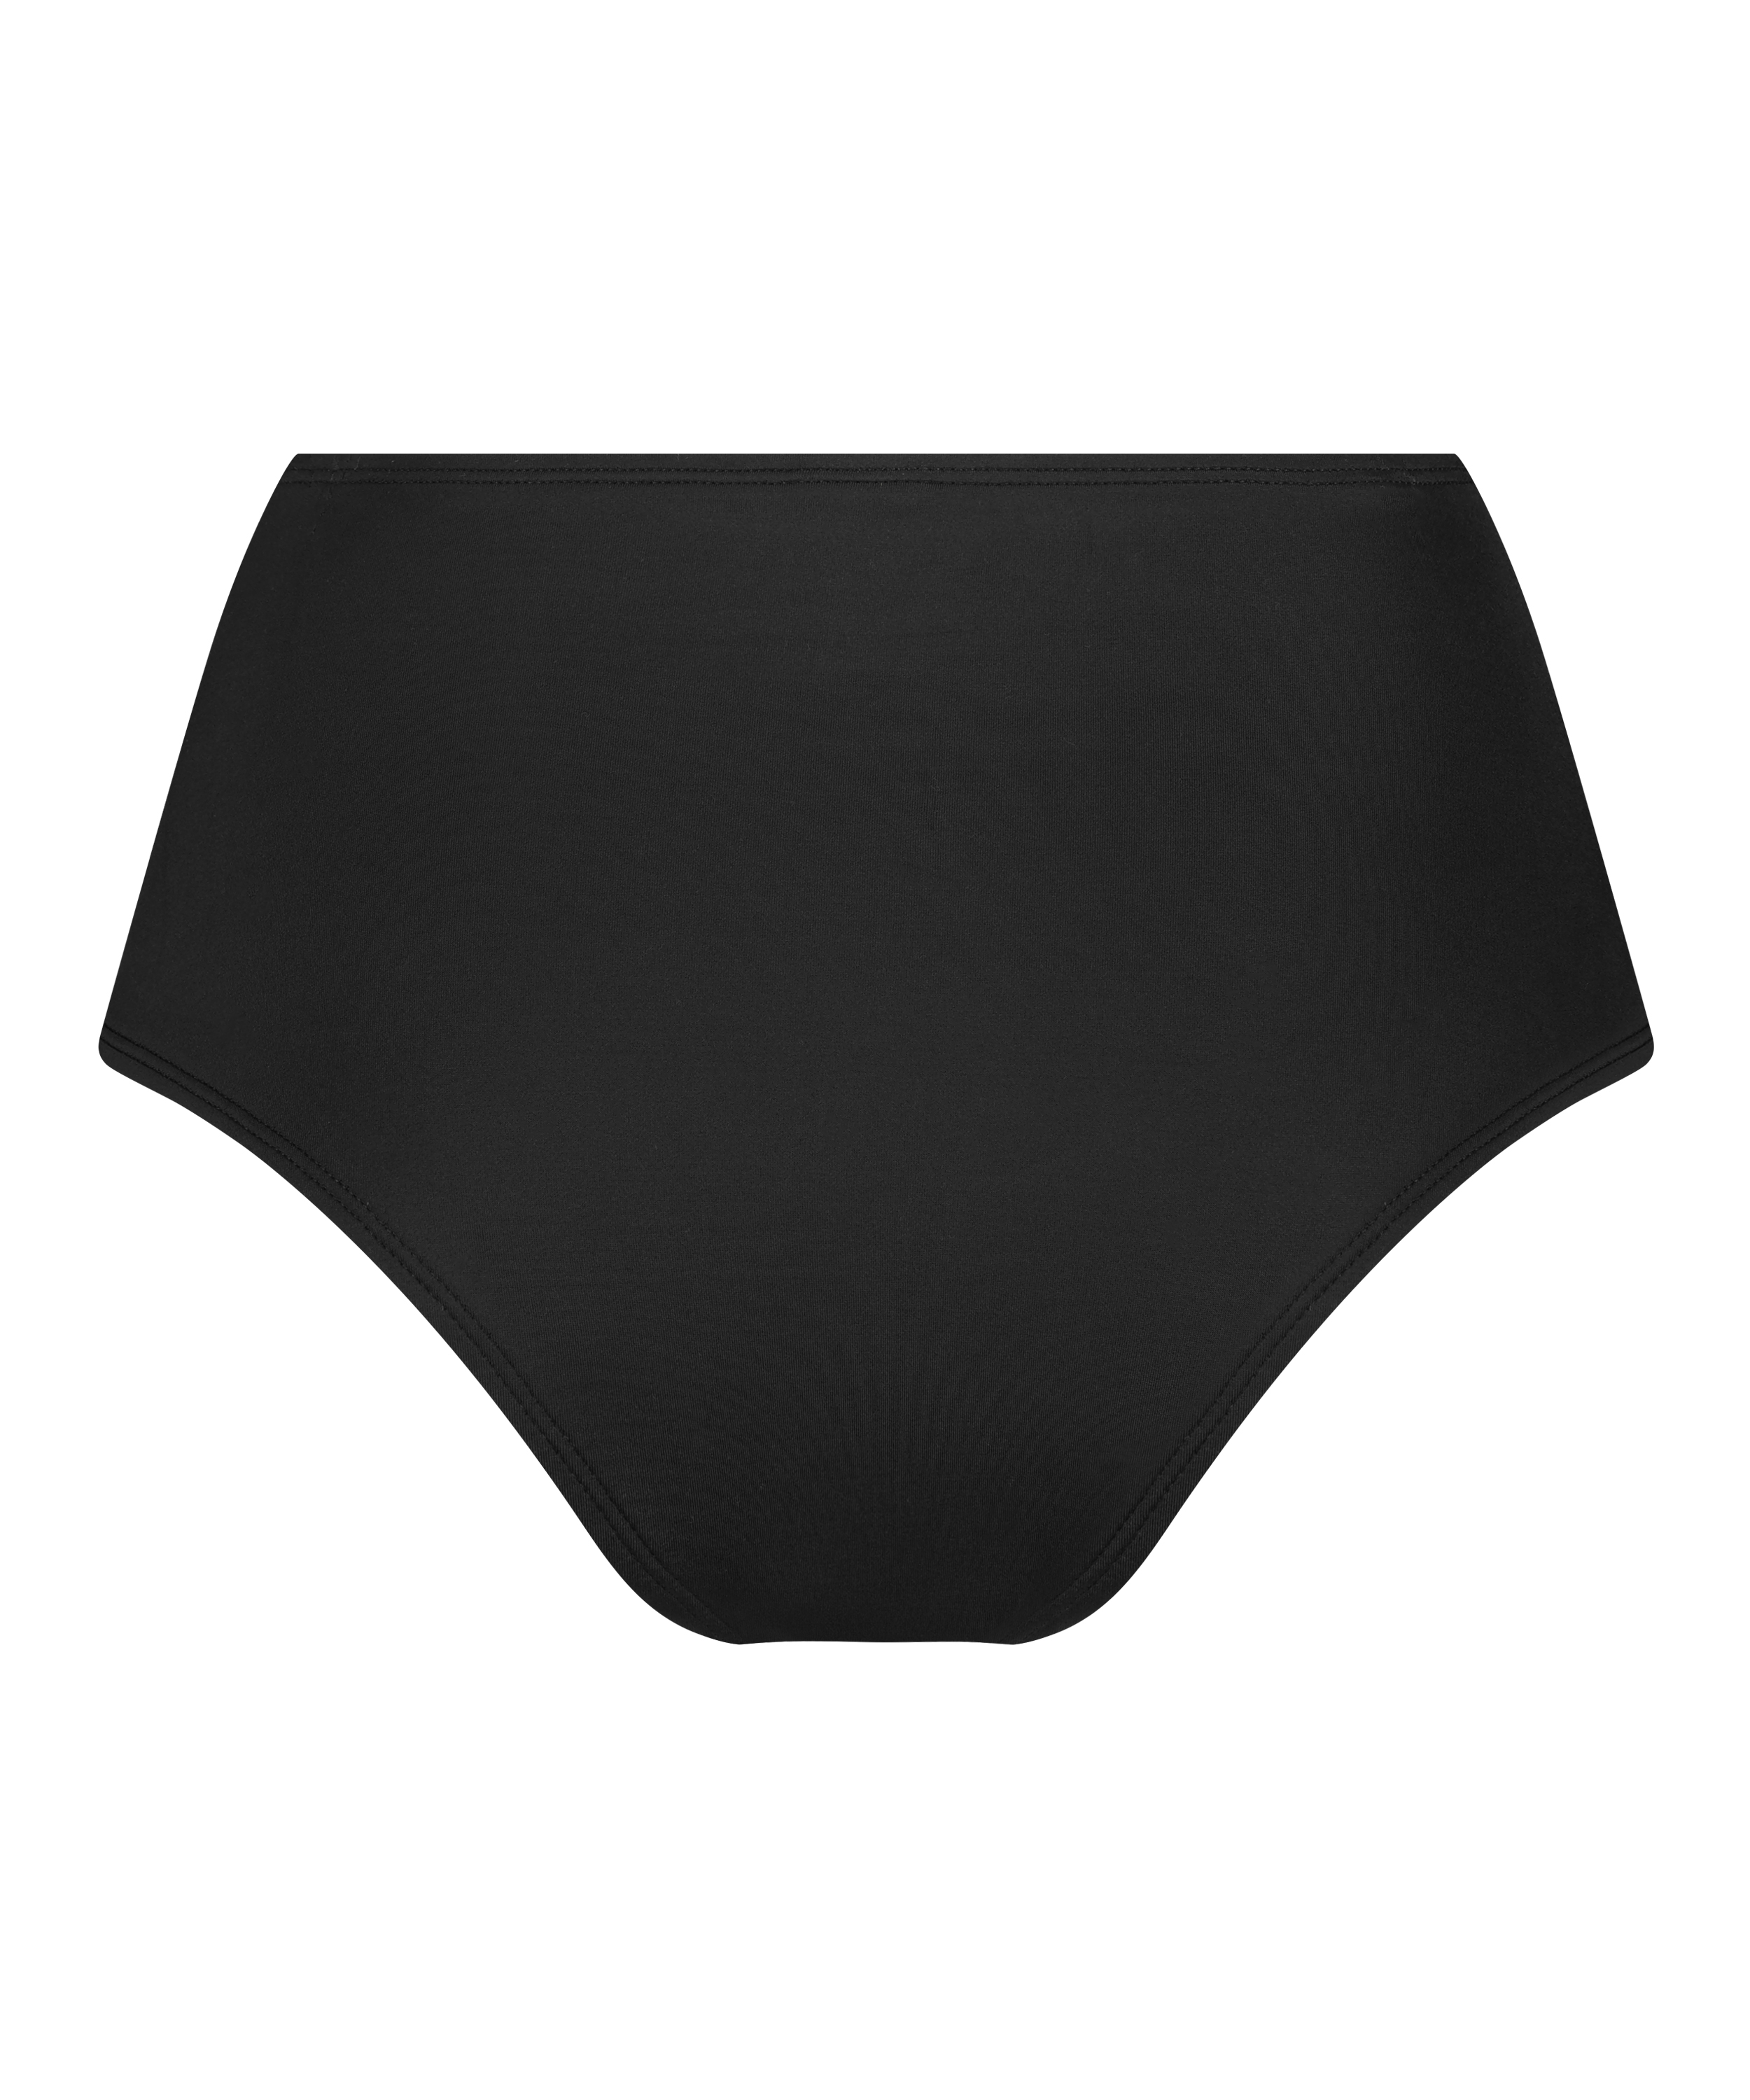 Luxe Rio Bikini Bottoms, Black, main